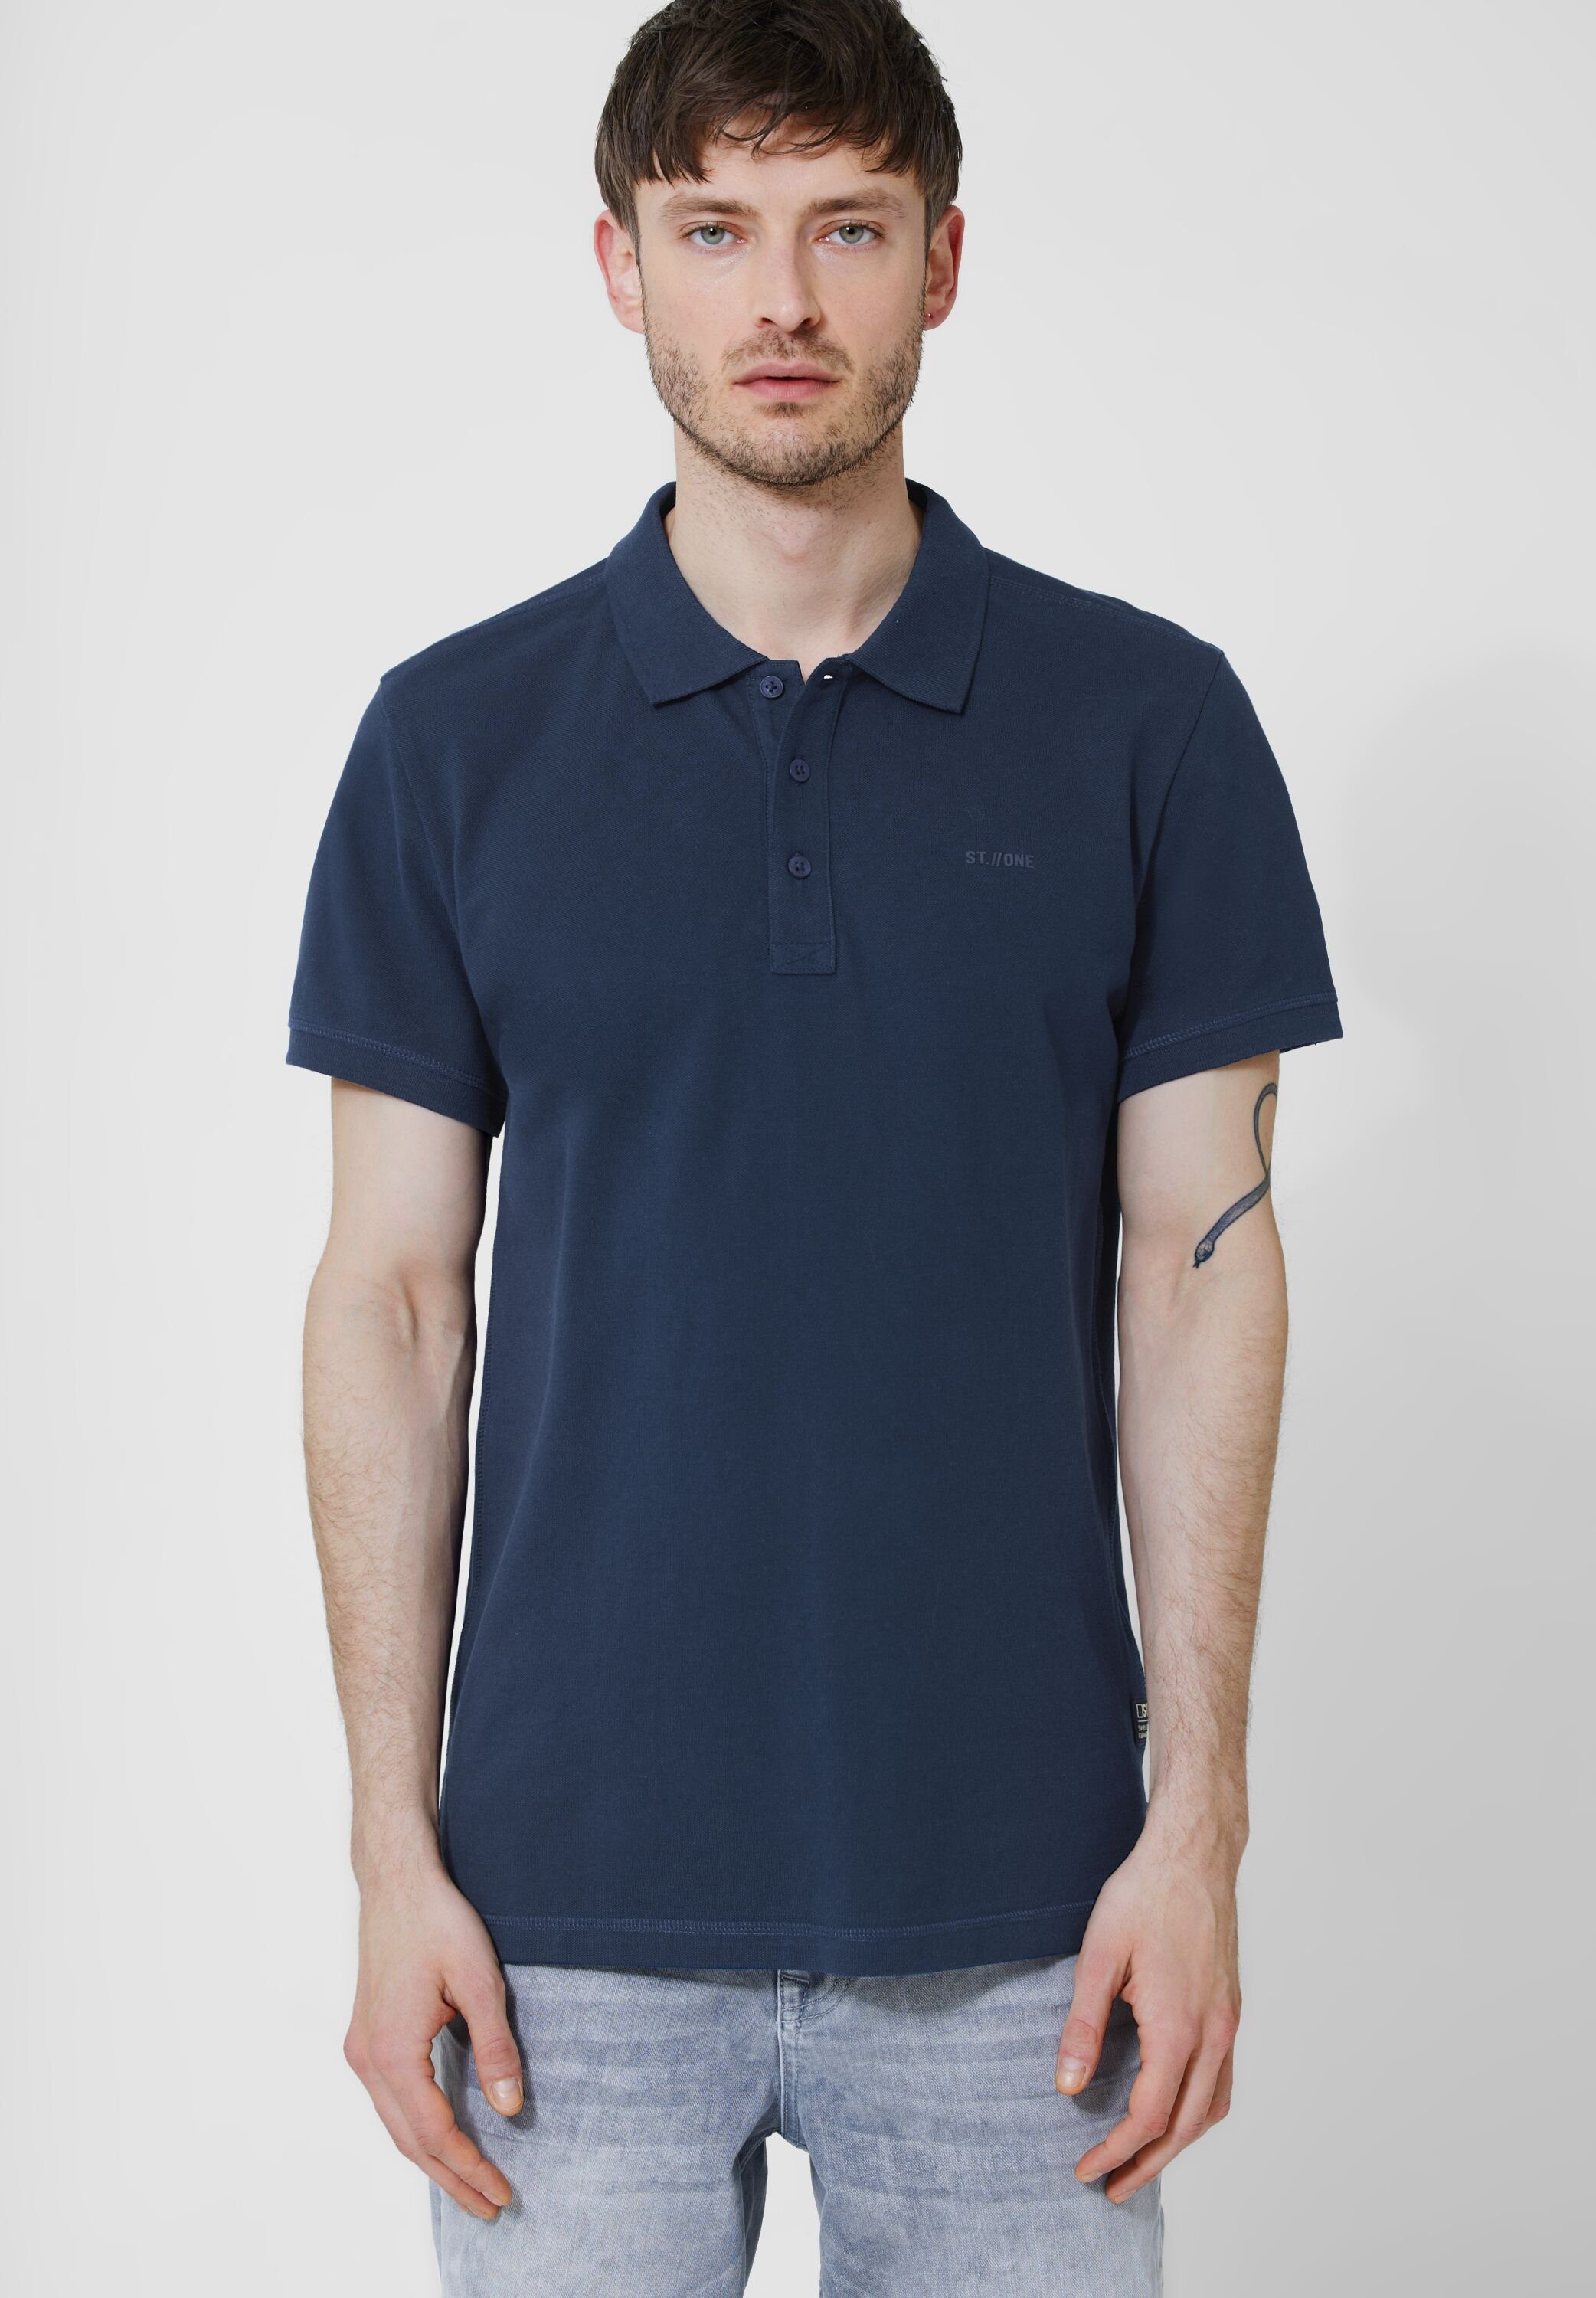 STREET ONE MEN Poloshirt in Unifarbe navy blue | Poloshirts